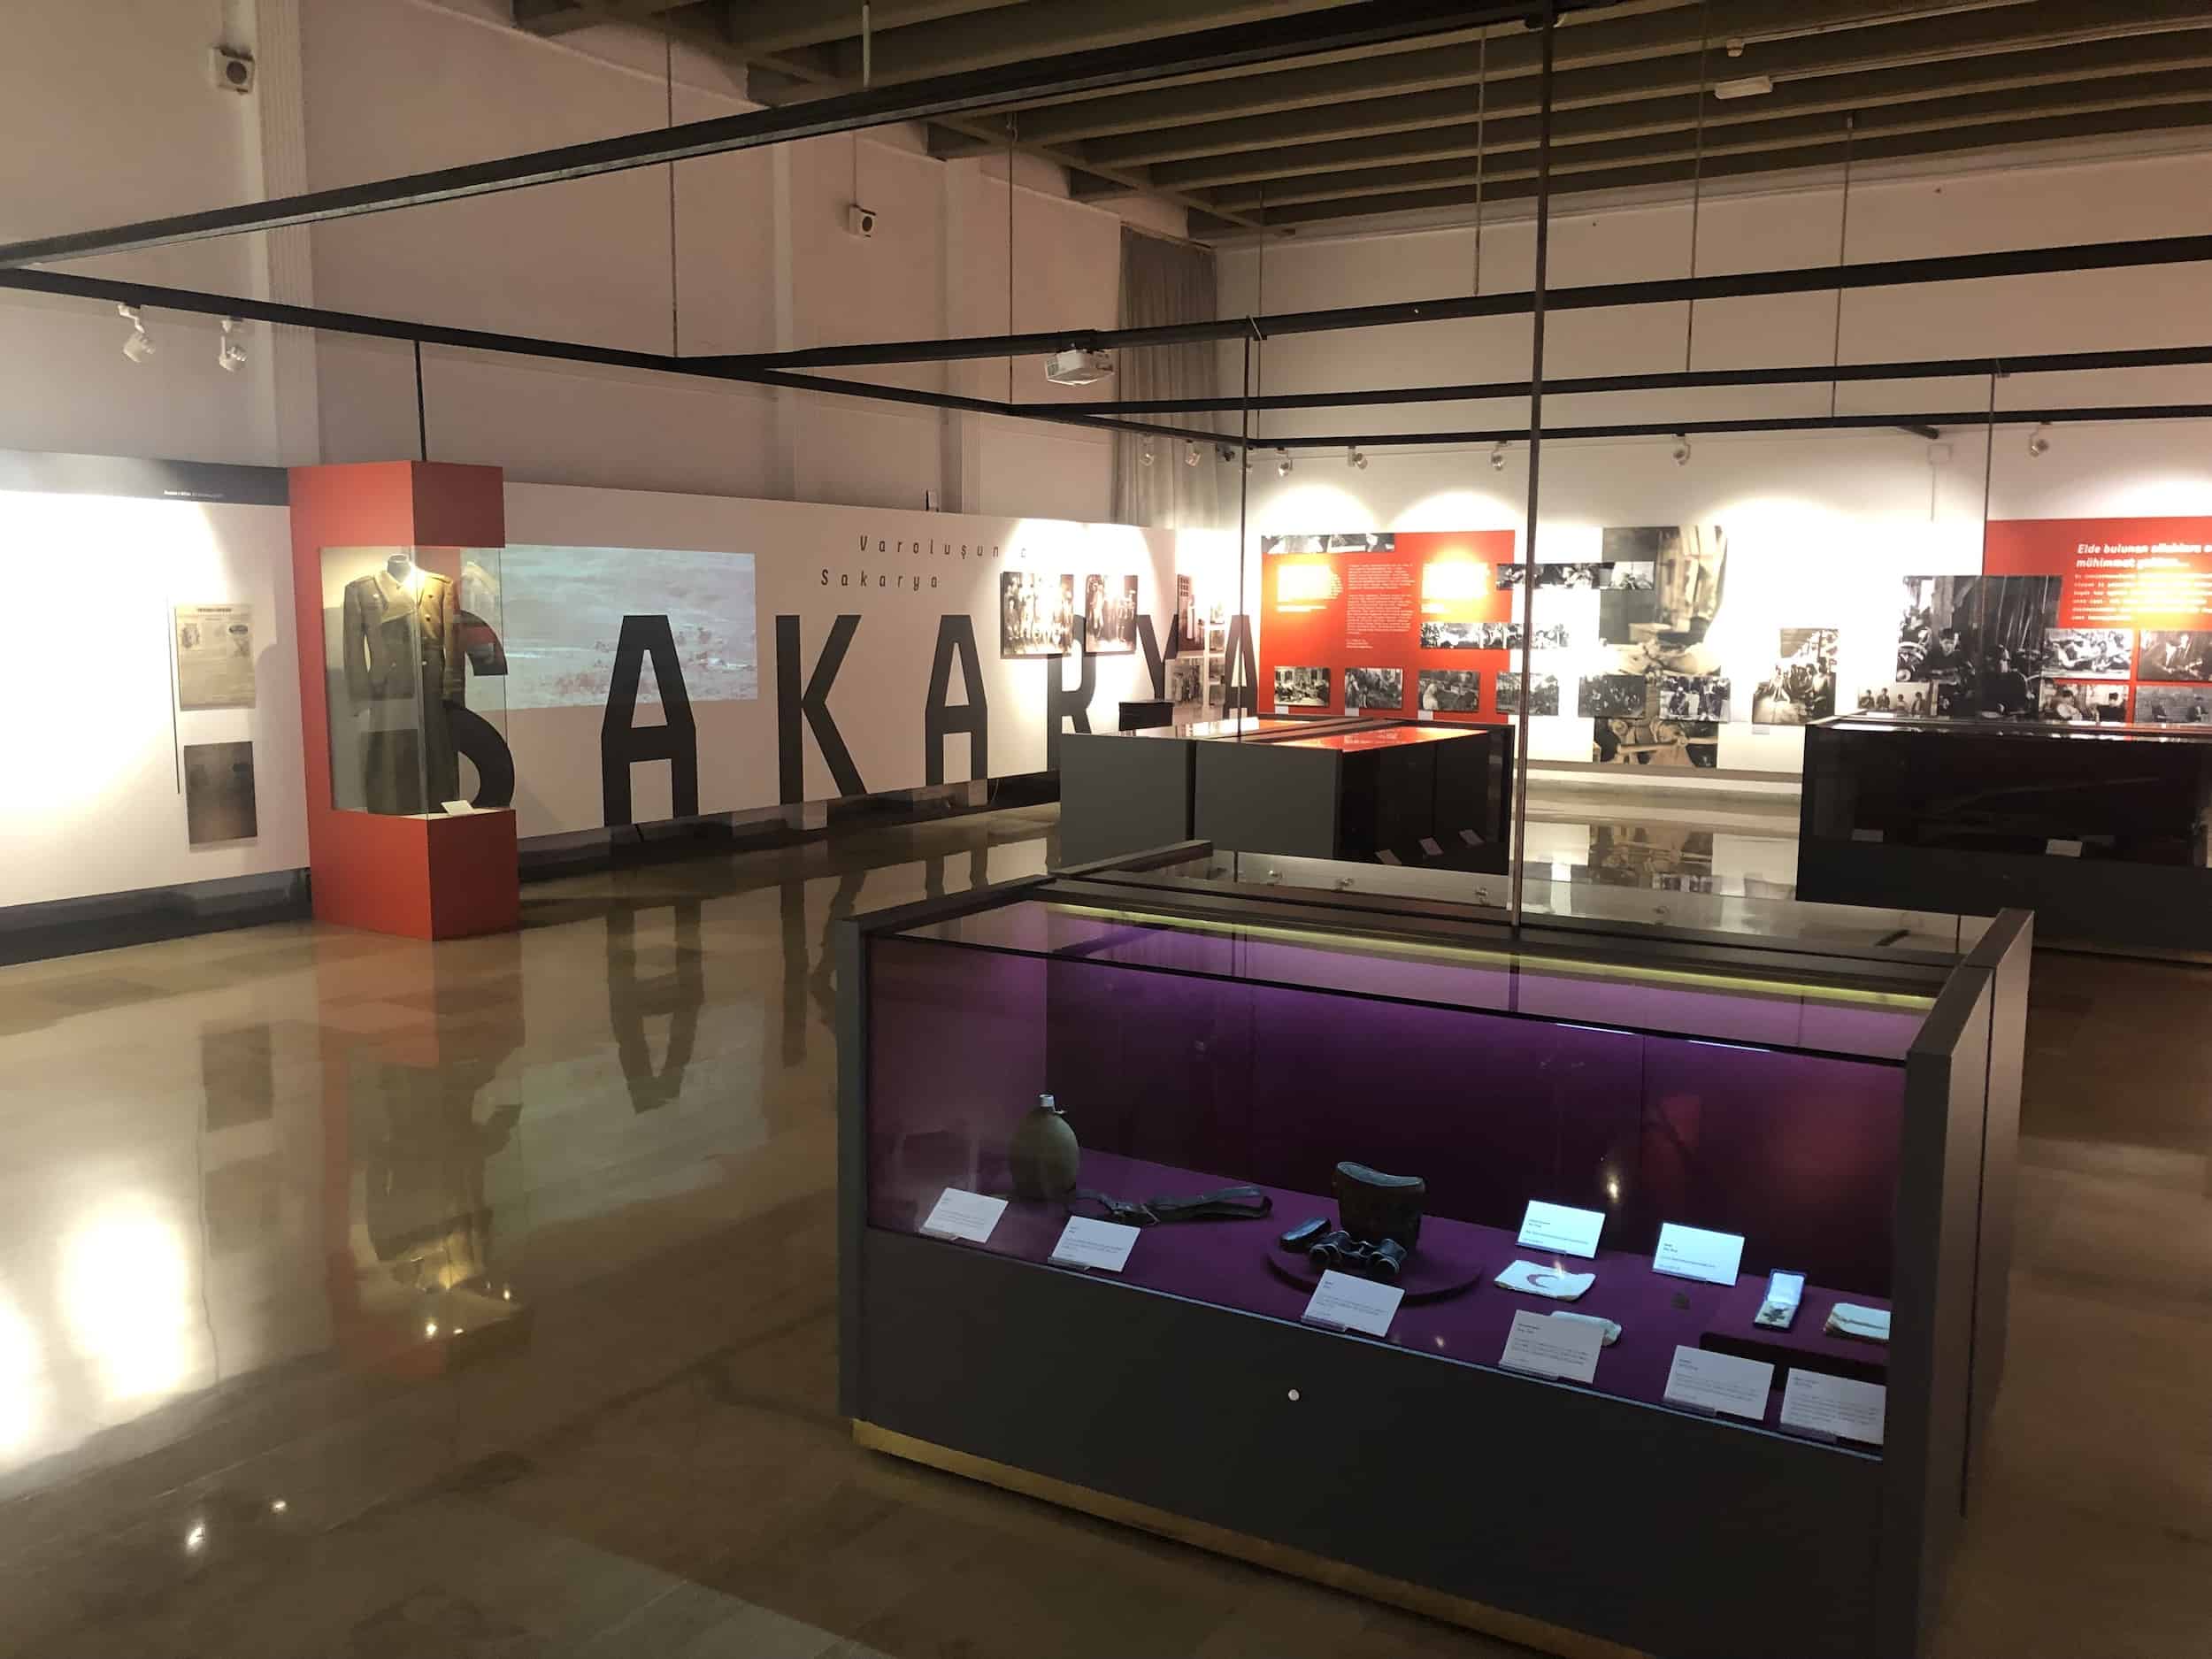 Battle of Sakarya exhibition at the Harbiye Military Museum in Istanbul, Turkey